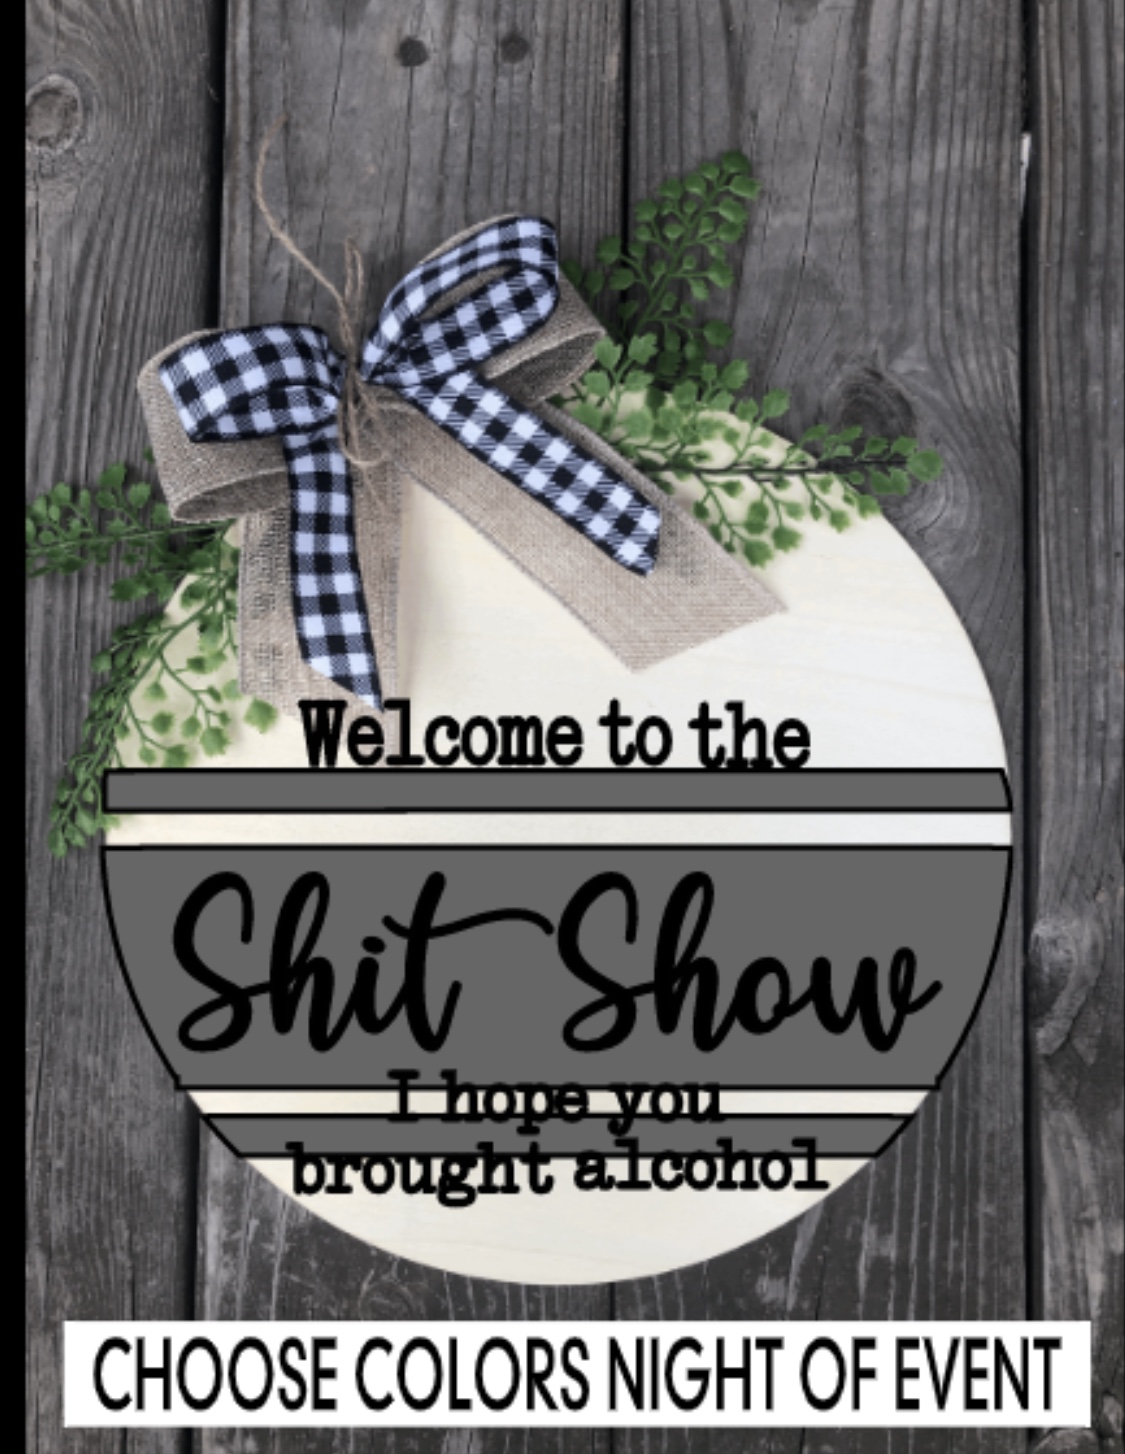 Shit show 